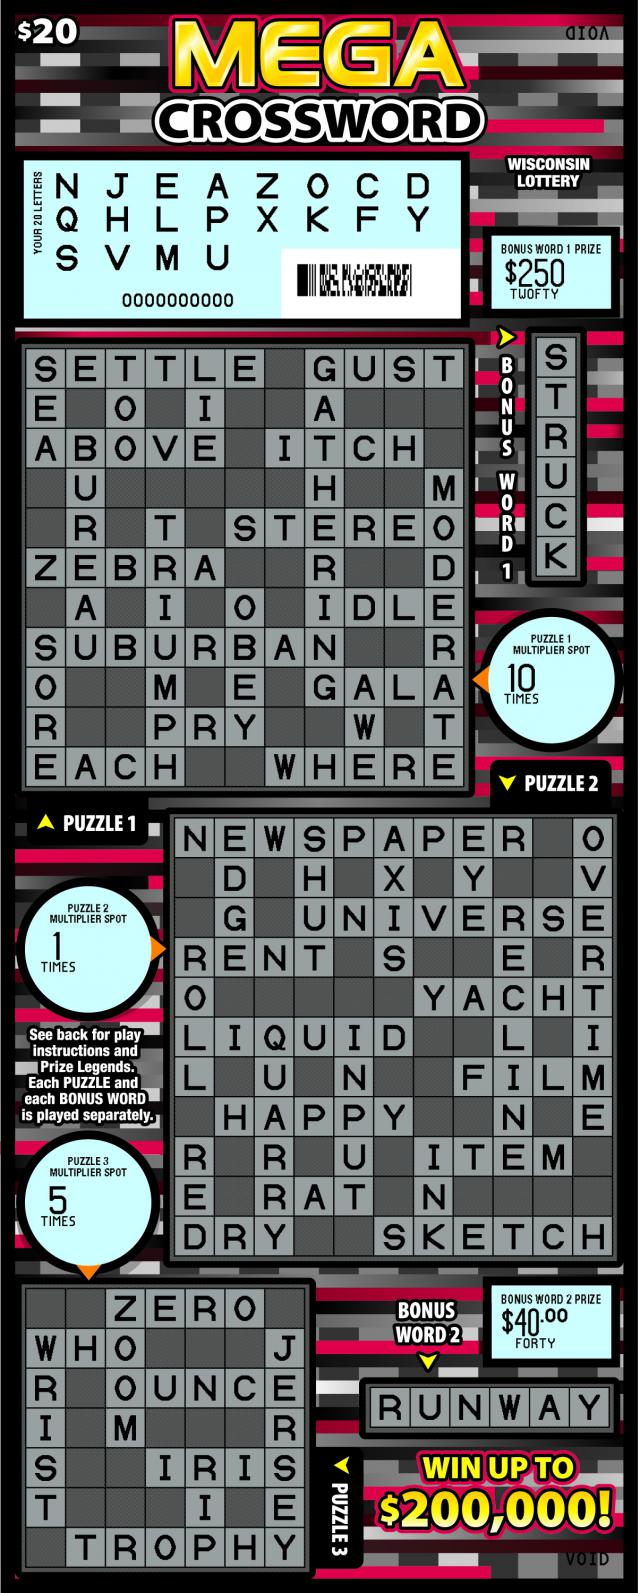 Mega Crossword (2067) Wisconsin Lottery